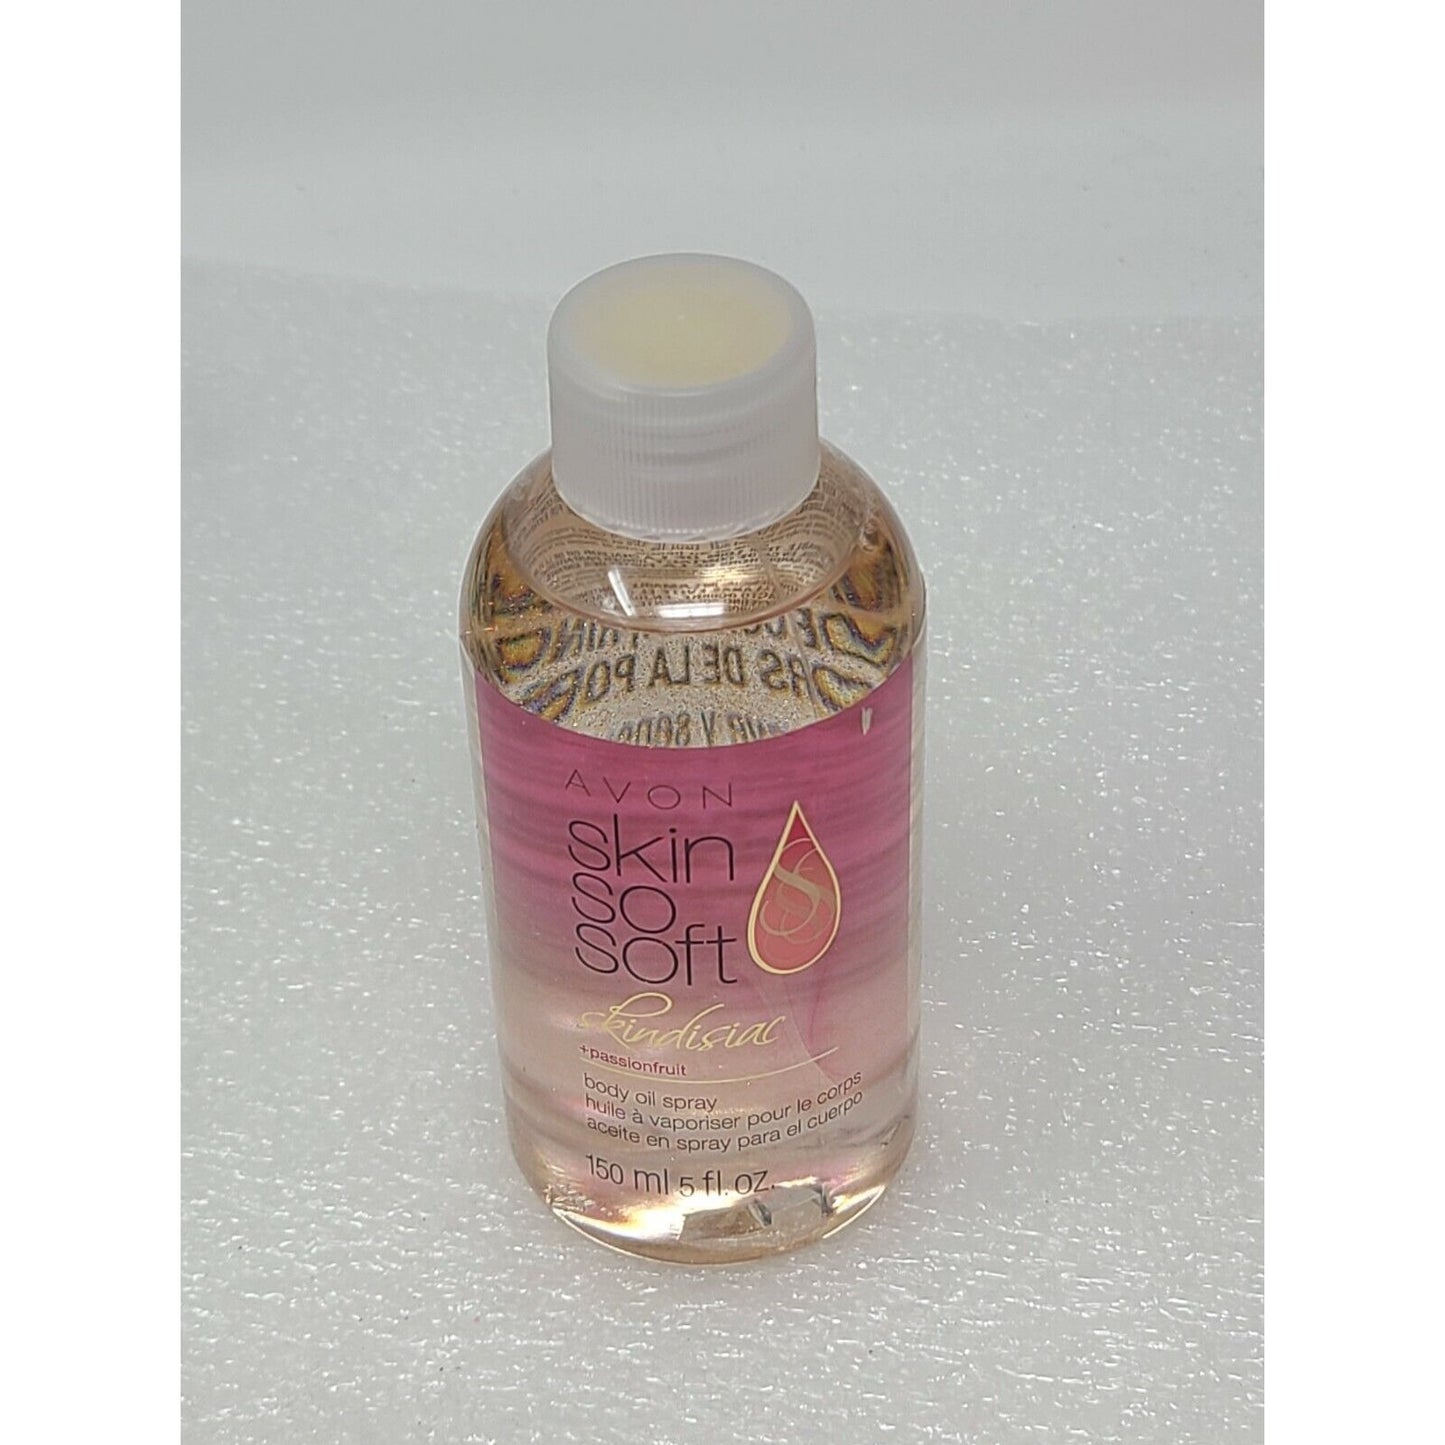 Avon Skin So Soft Skindisiac Body Oil Spray Refill Passionfruit 5 oz